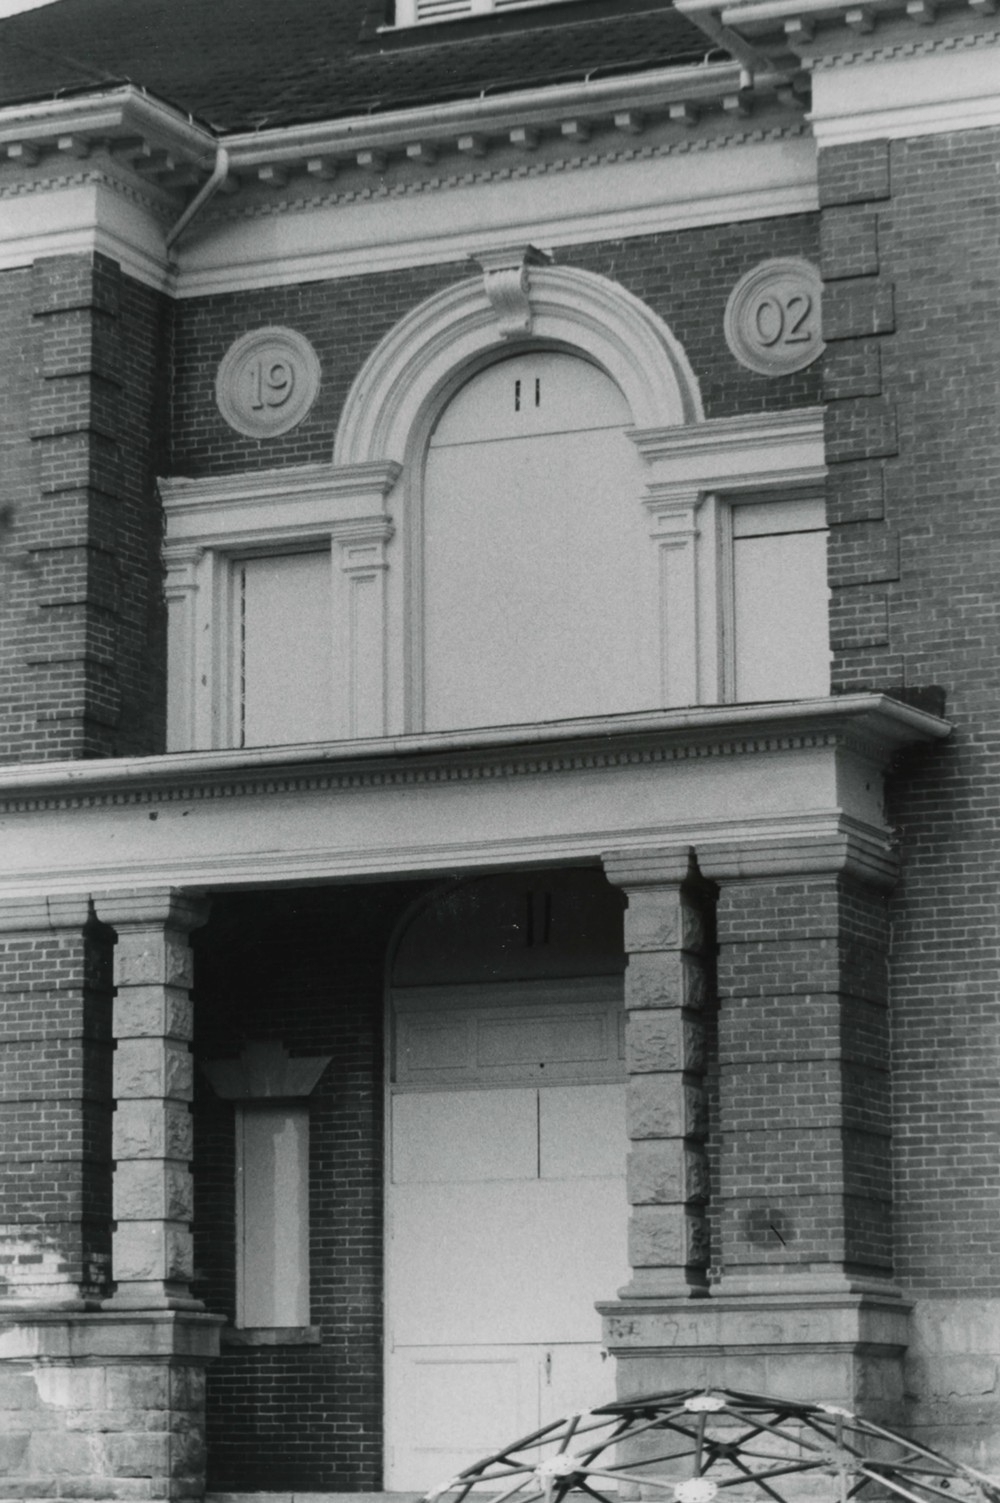 Walnut Street Elementary School, Wooster Ohio Central Portico of Main Facade (1983)